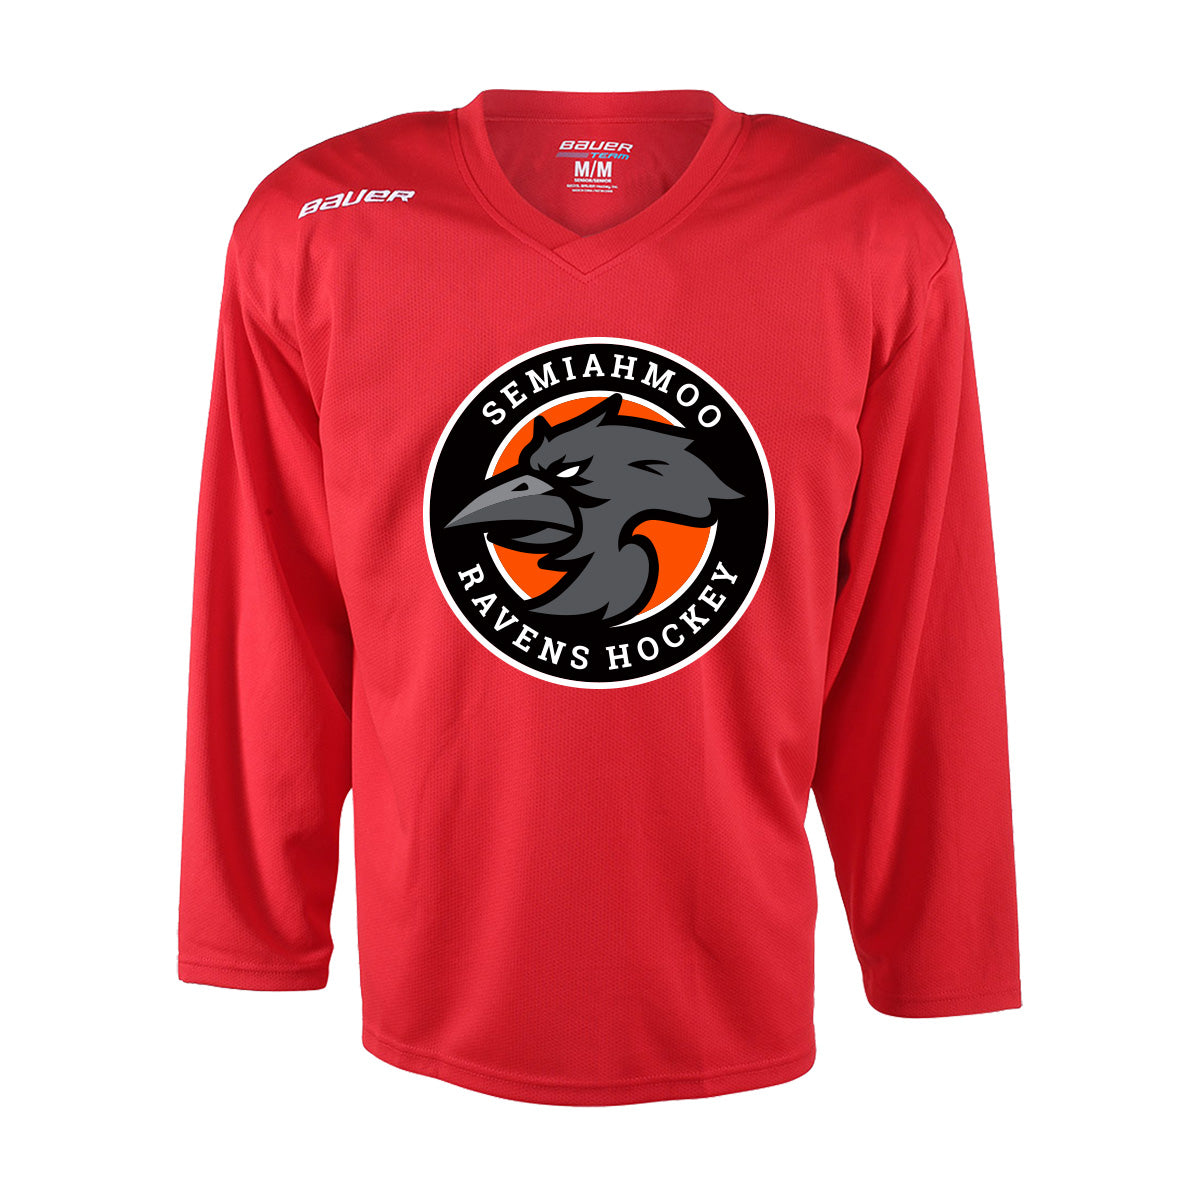 Shop — Semiahmoo Ravens Hockey - Home of the Ravens